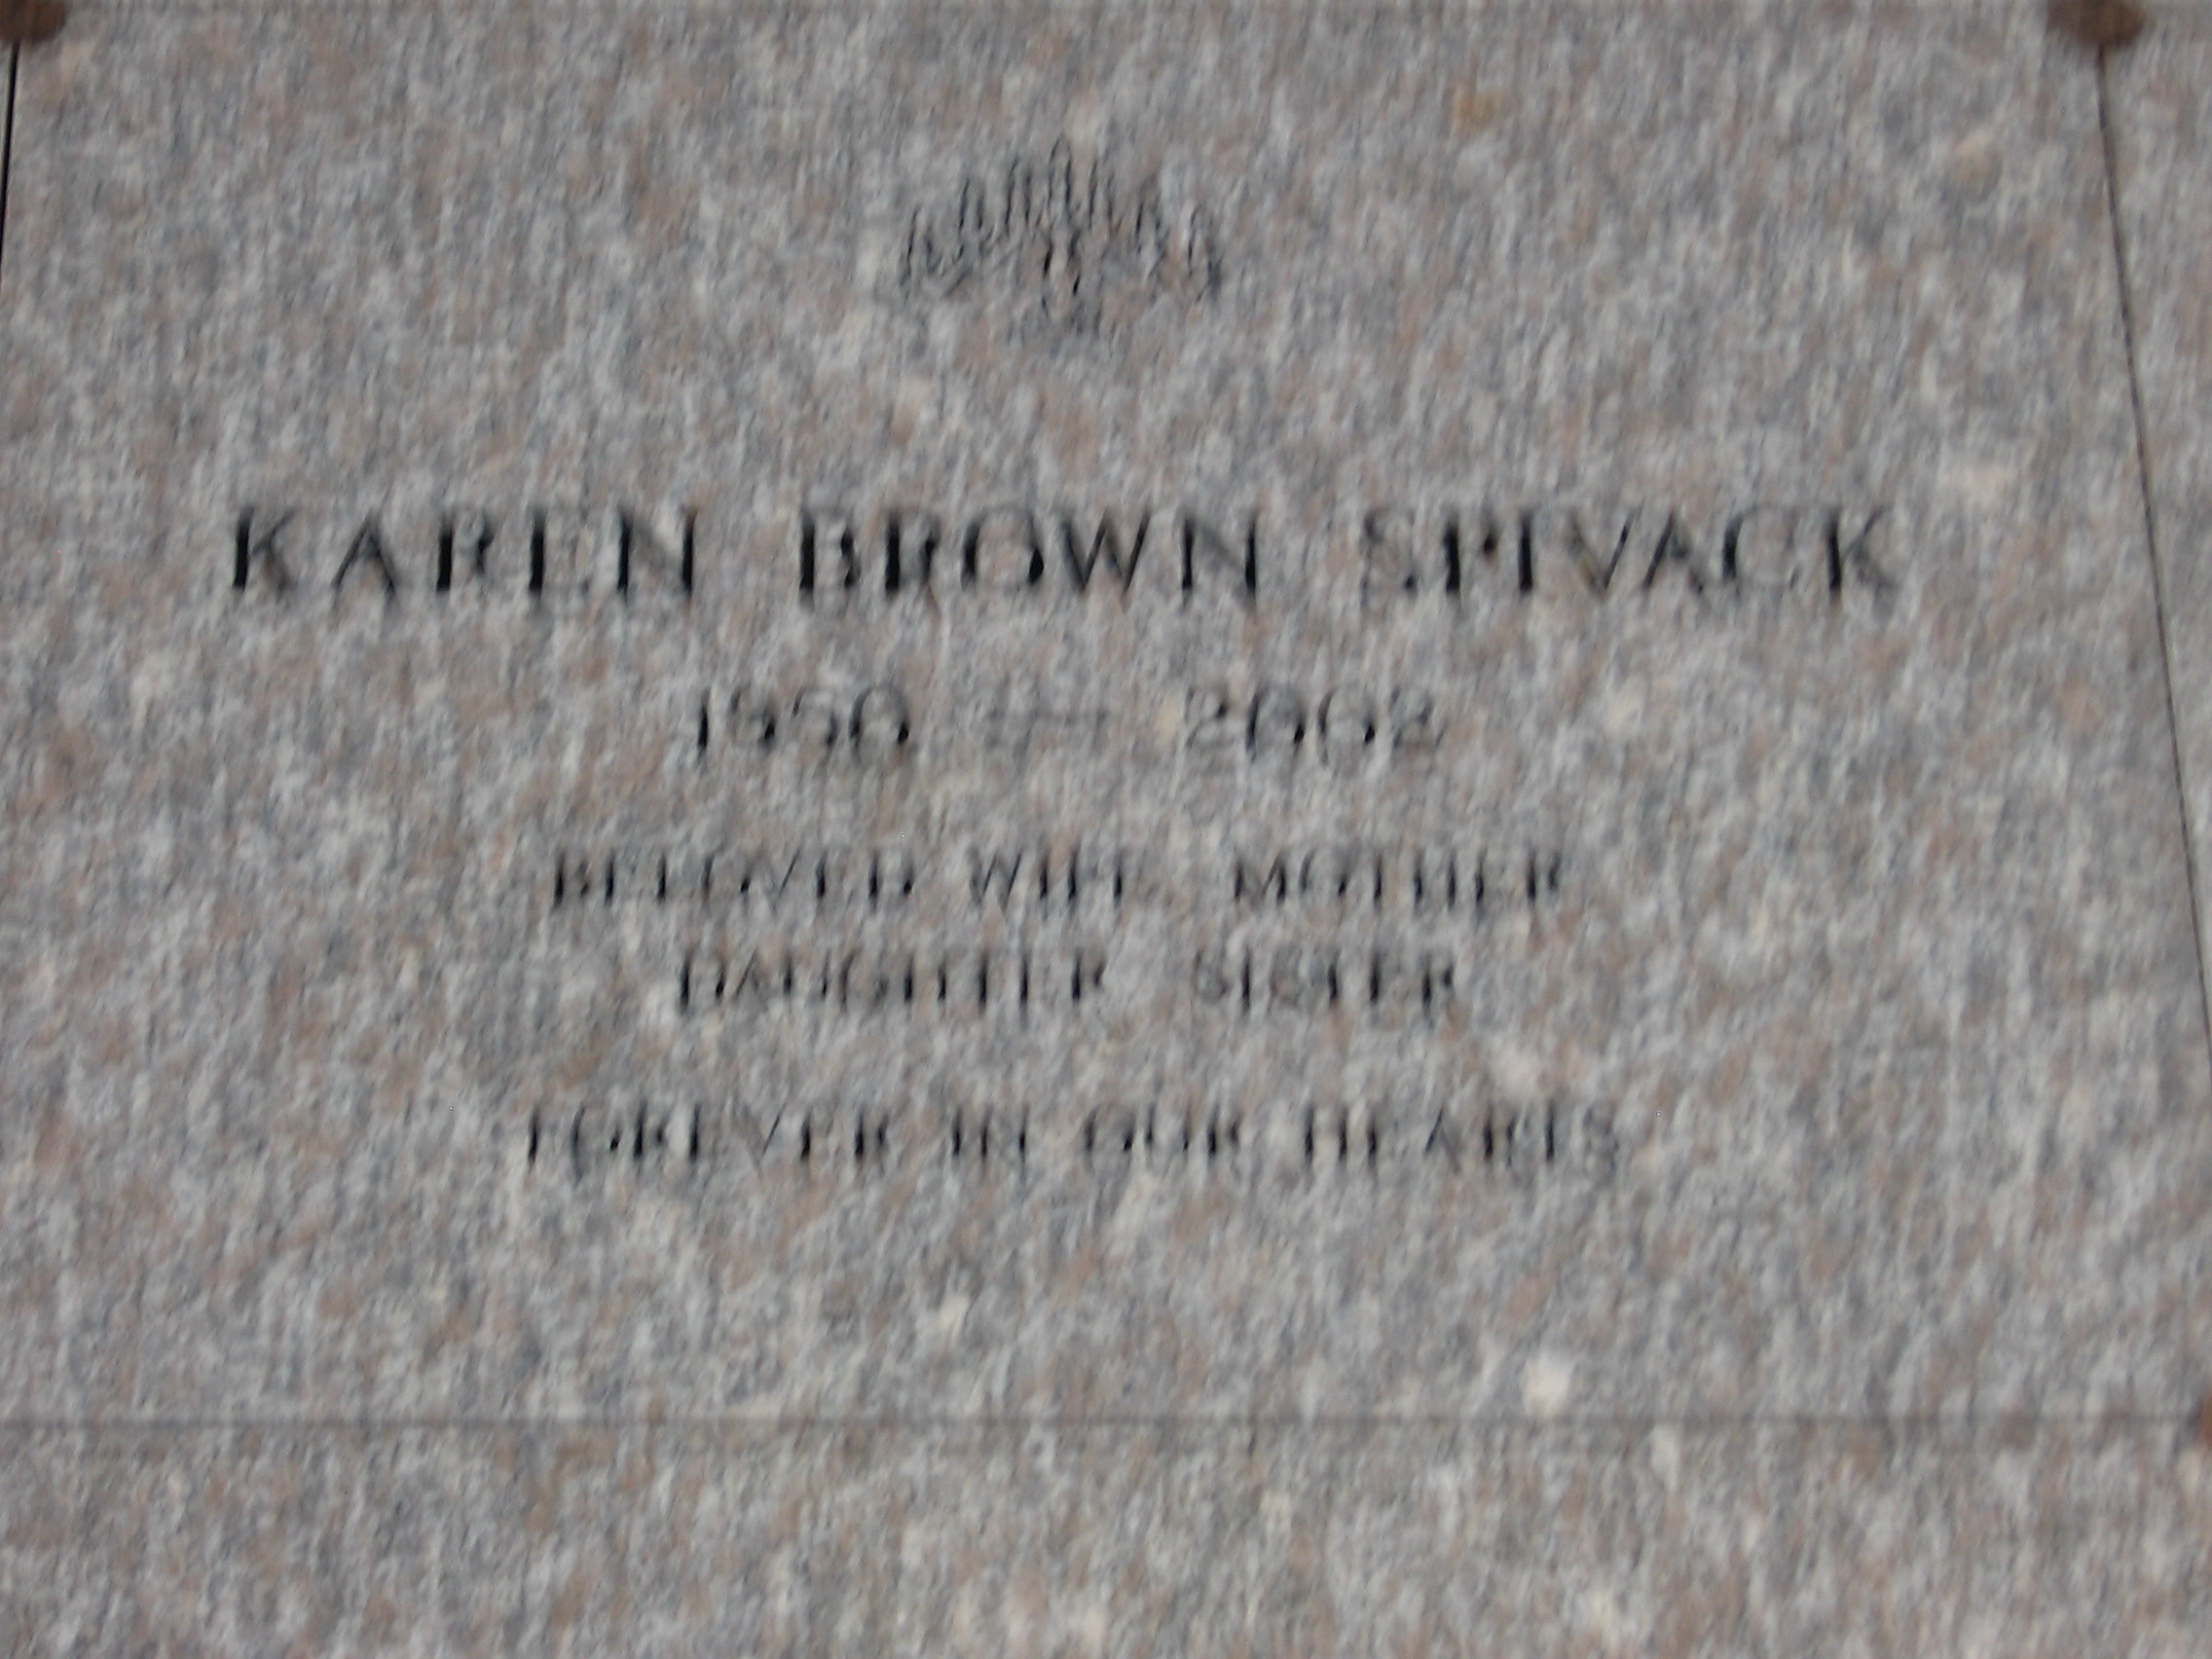 Karen Brown Spivack